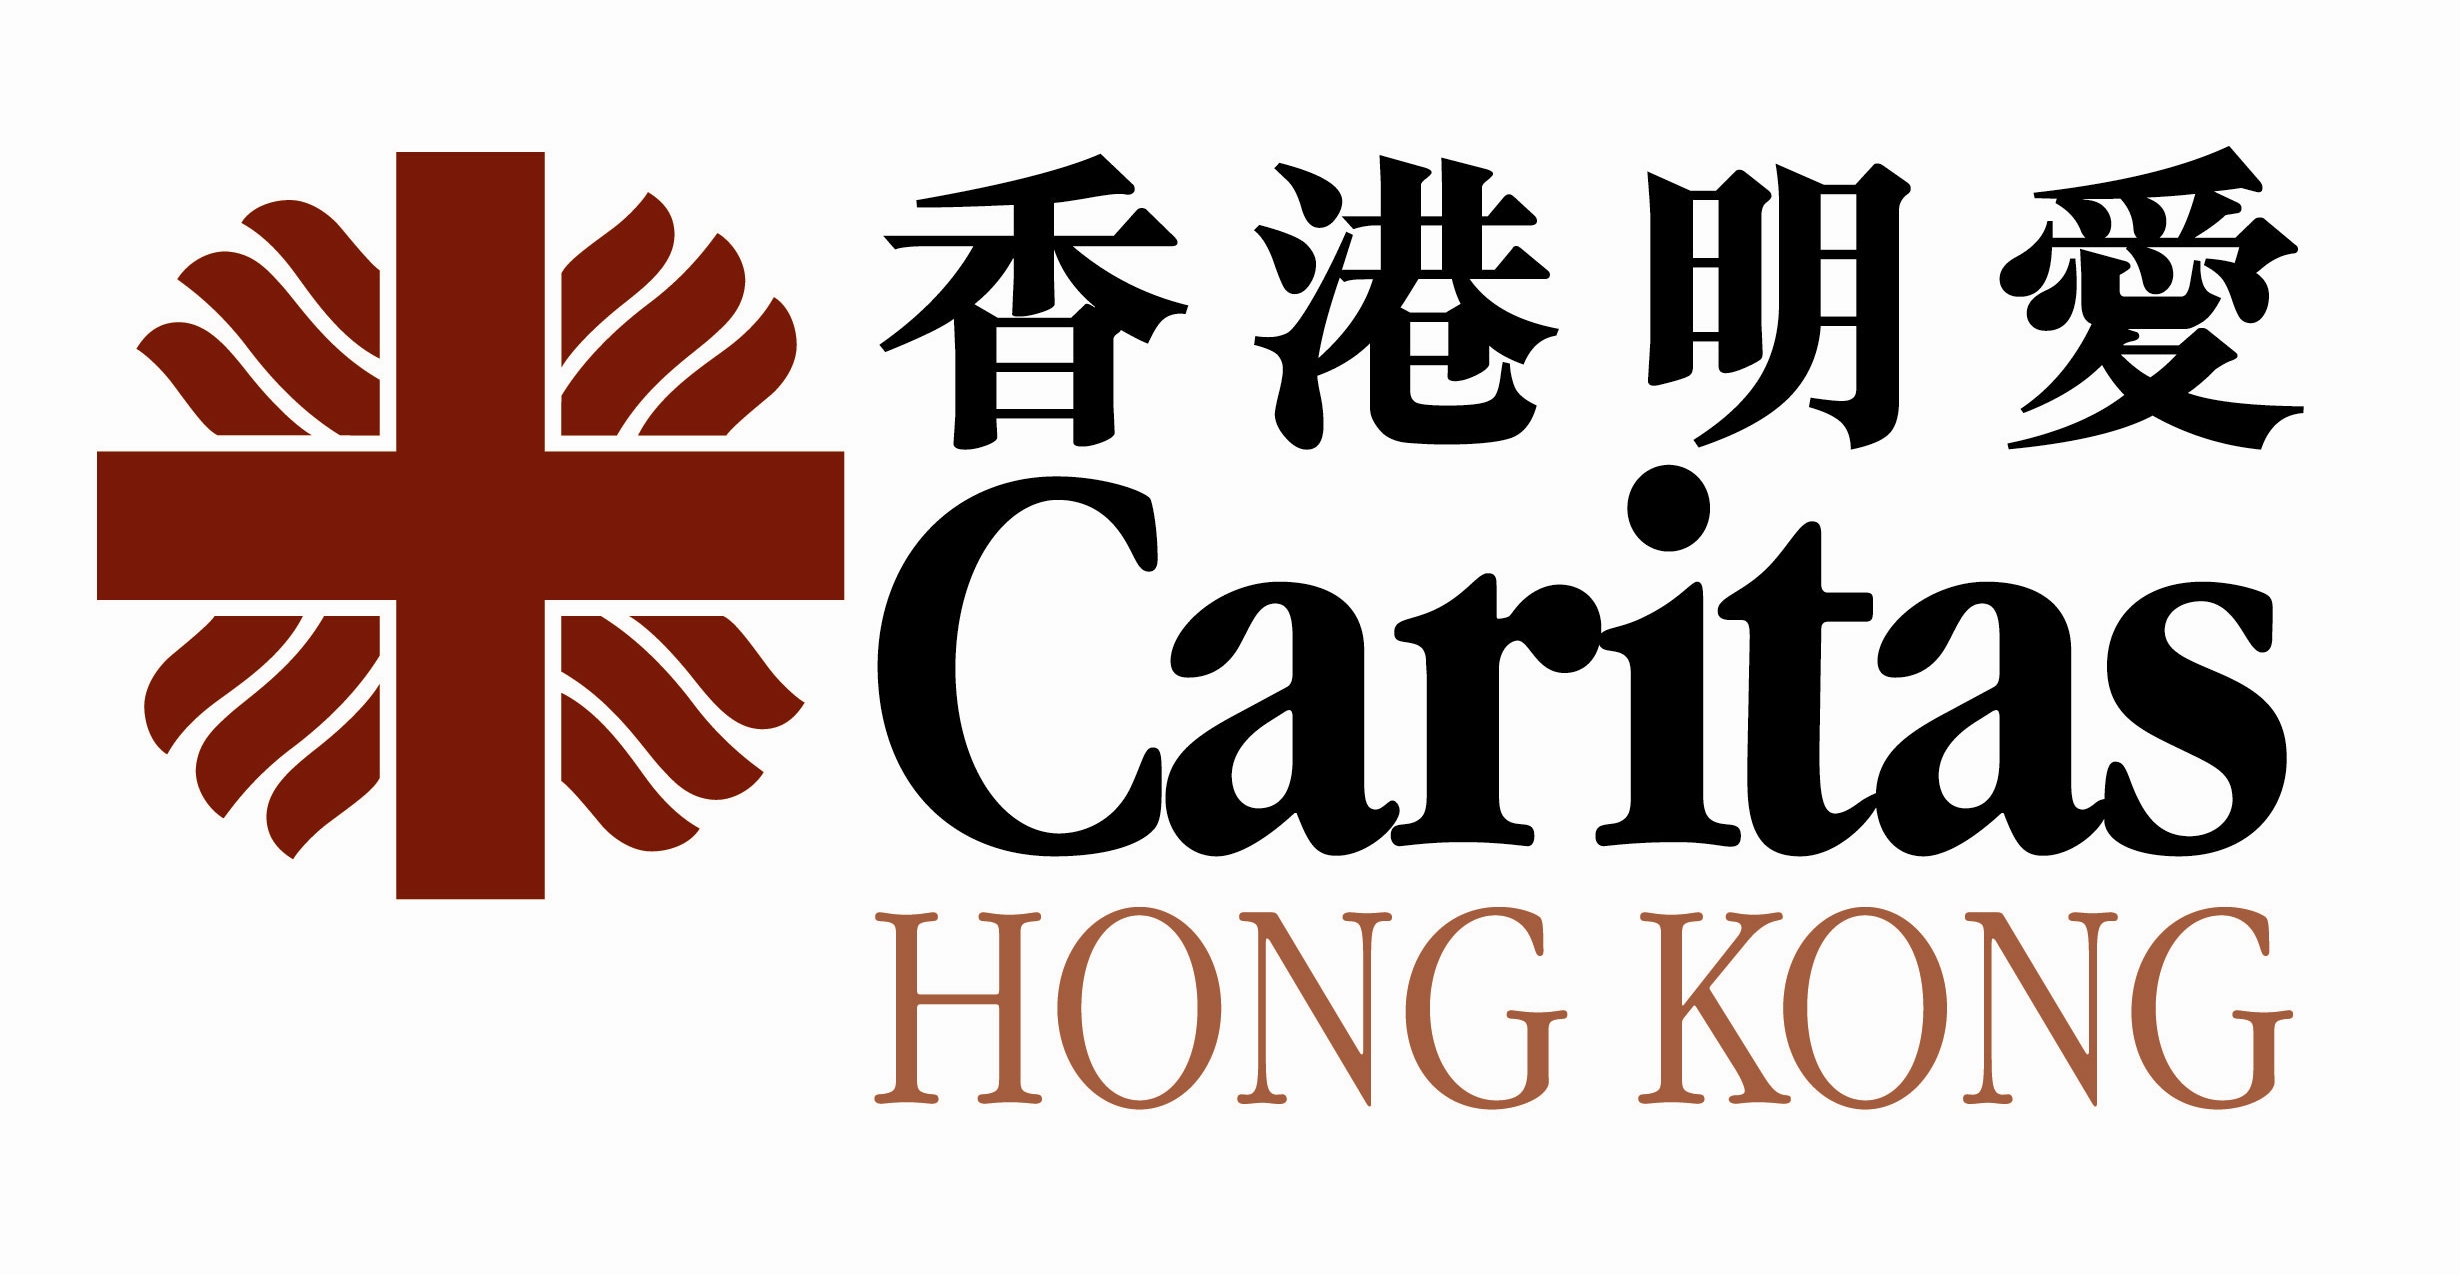 Caritas Hong Kong